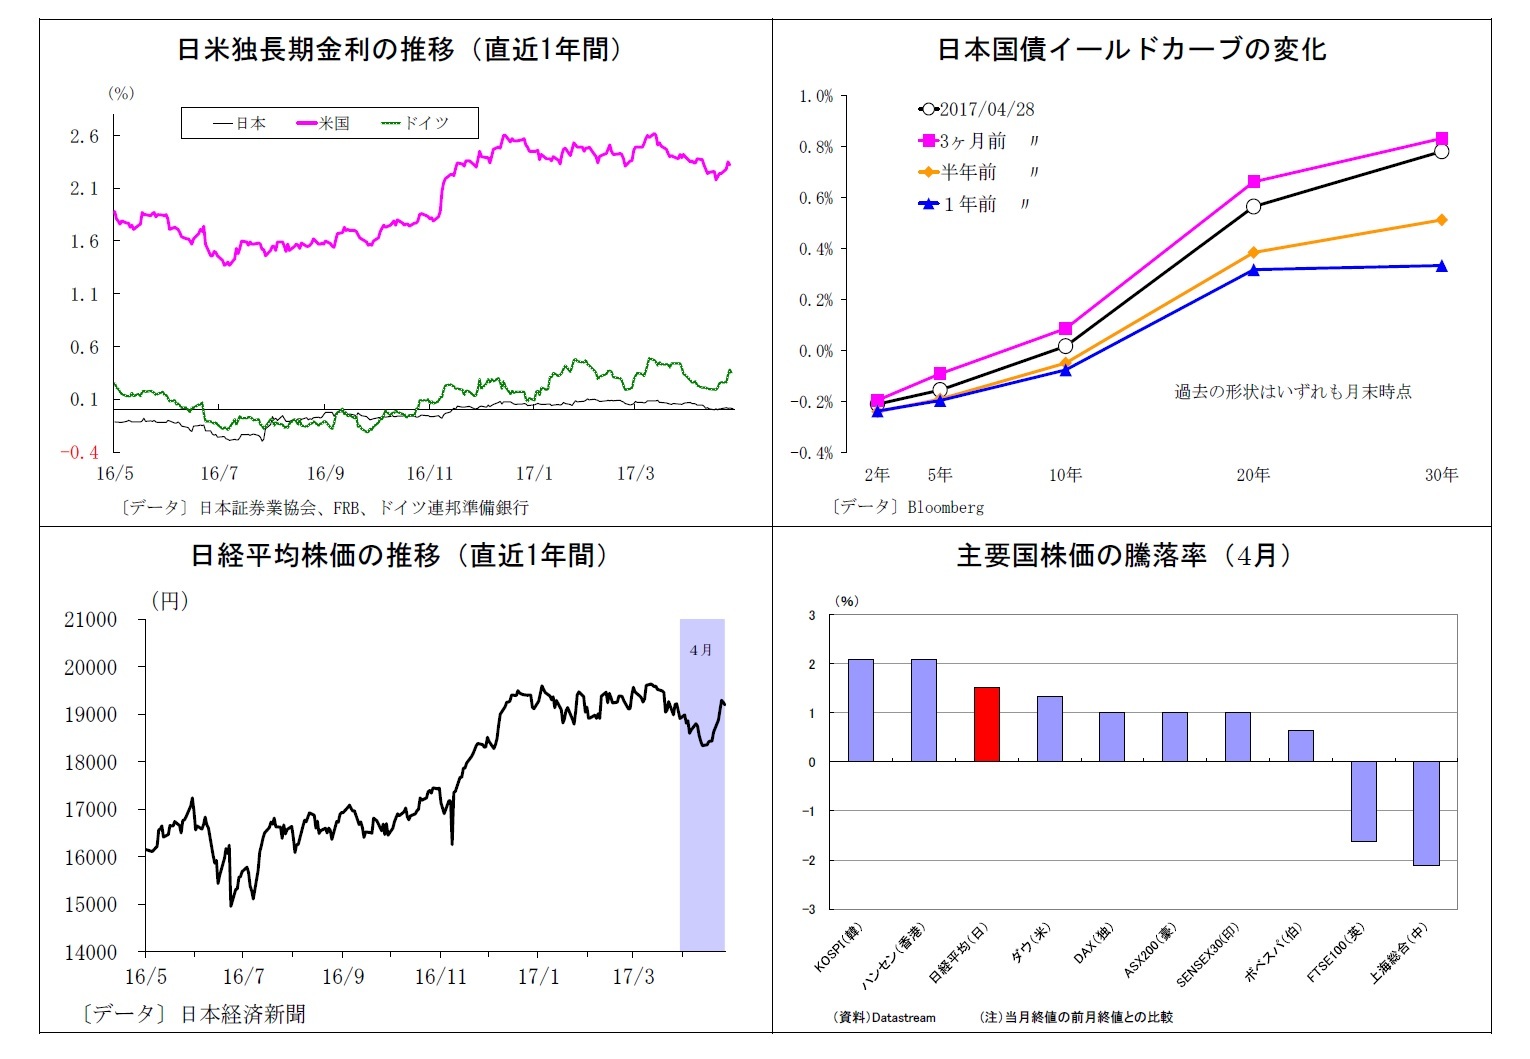 日米独長期金利の推移（直近1年間）/日本国債イールドカーブの変化/日経平均株価の推移（直近1年間）/主要国株価の騰落率（4月）